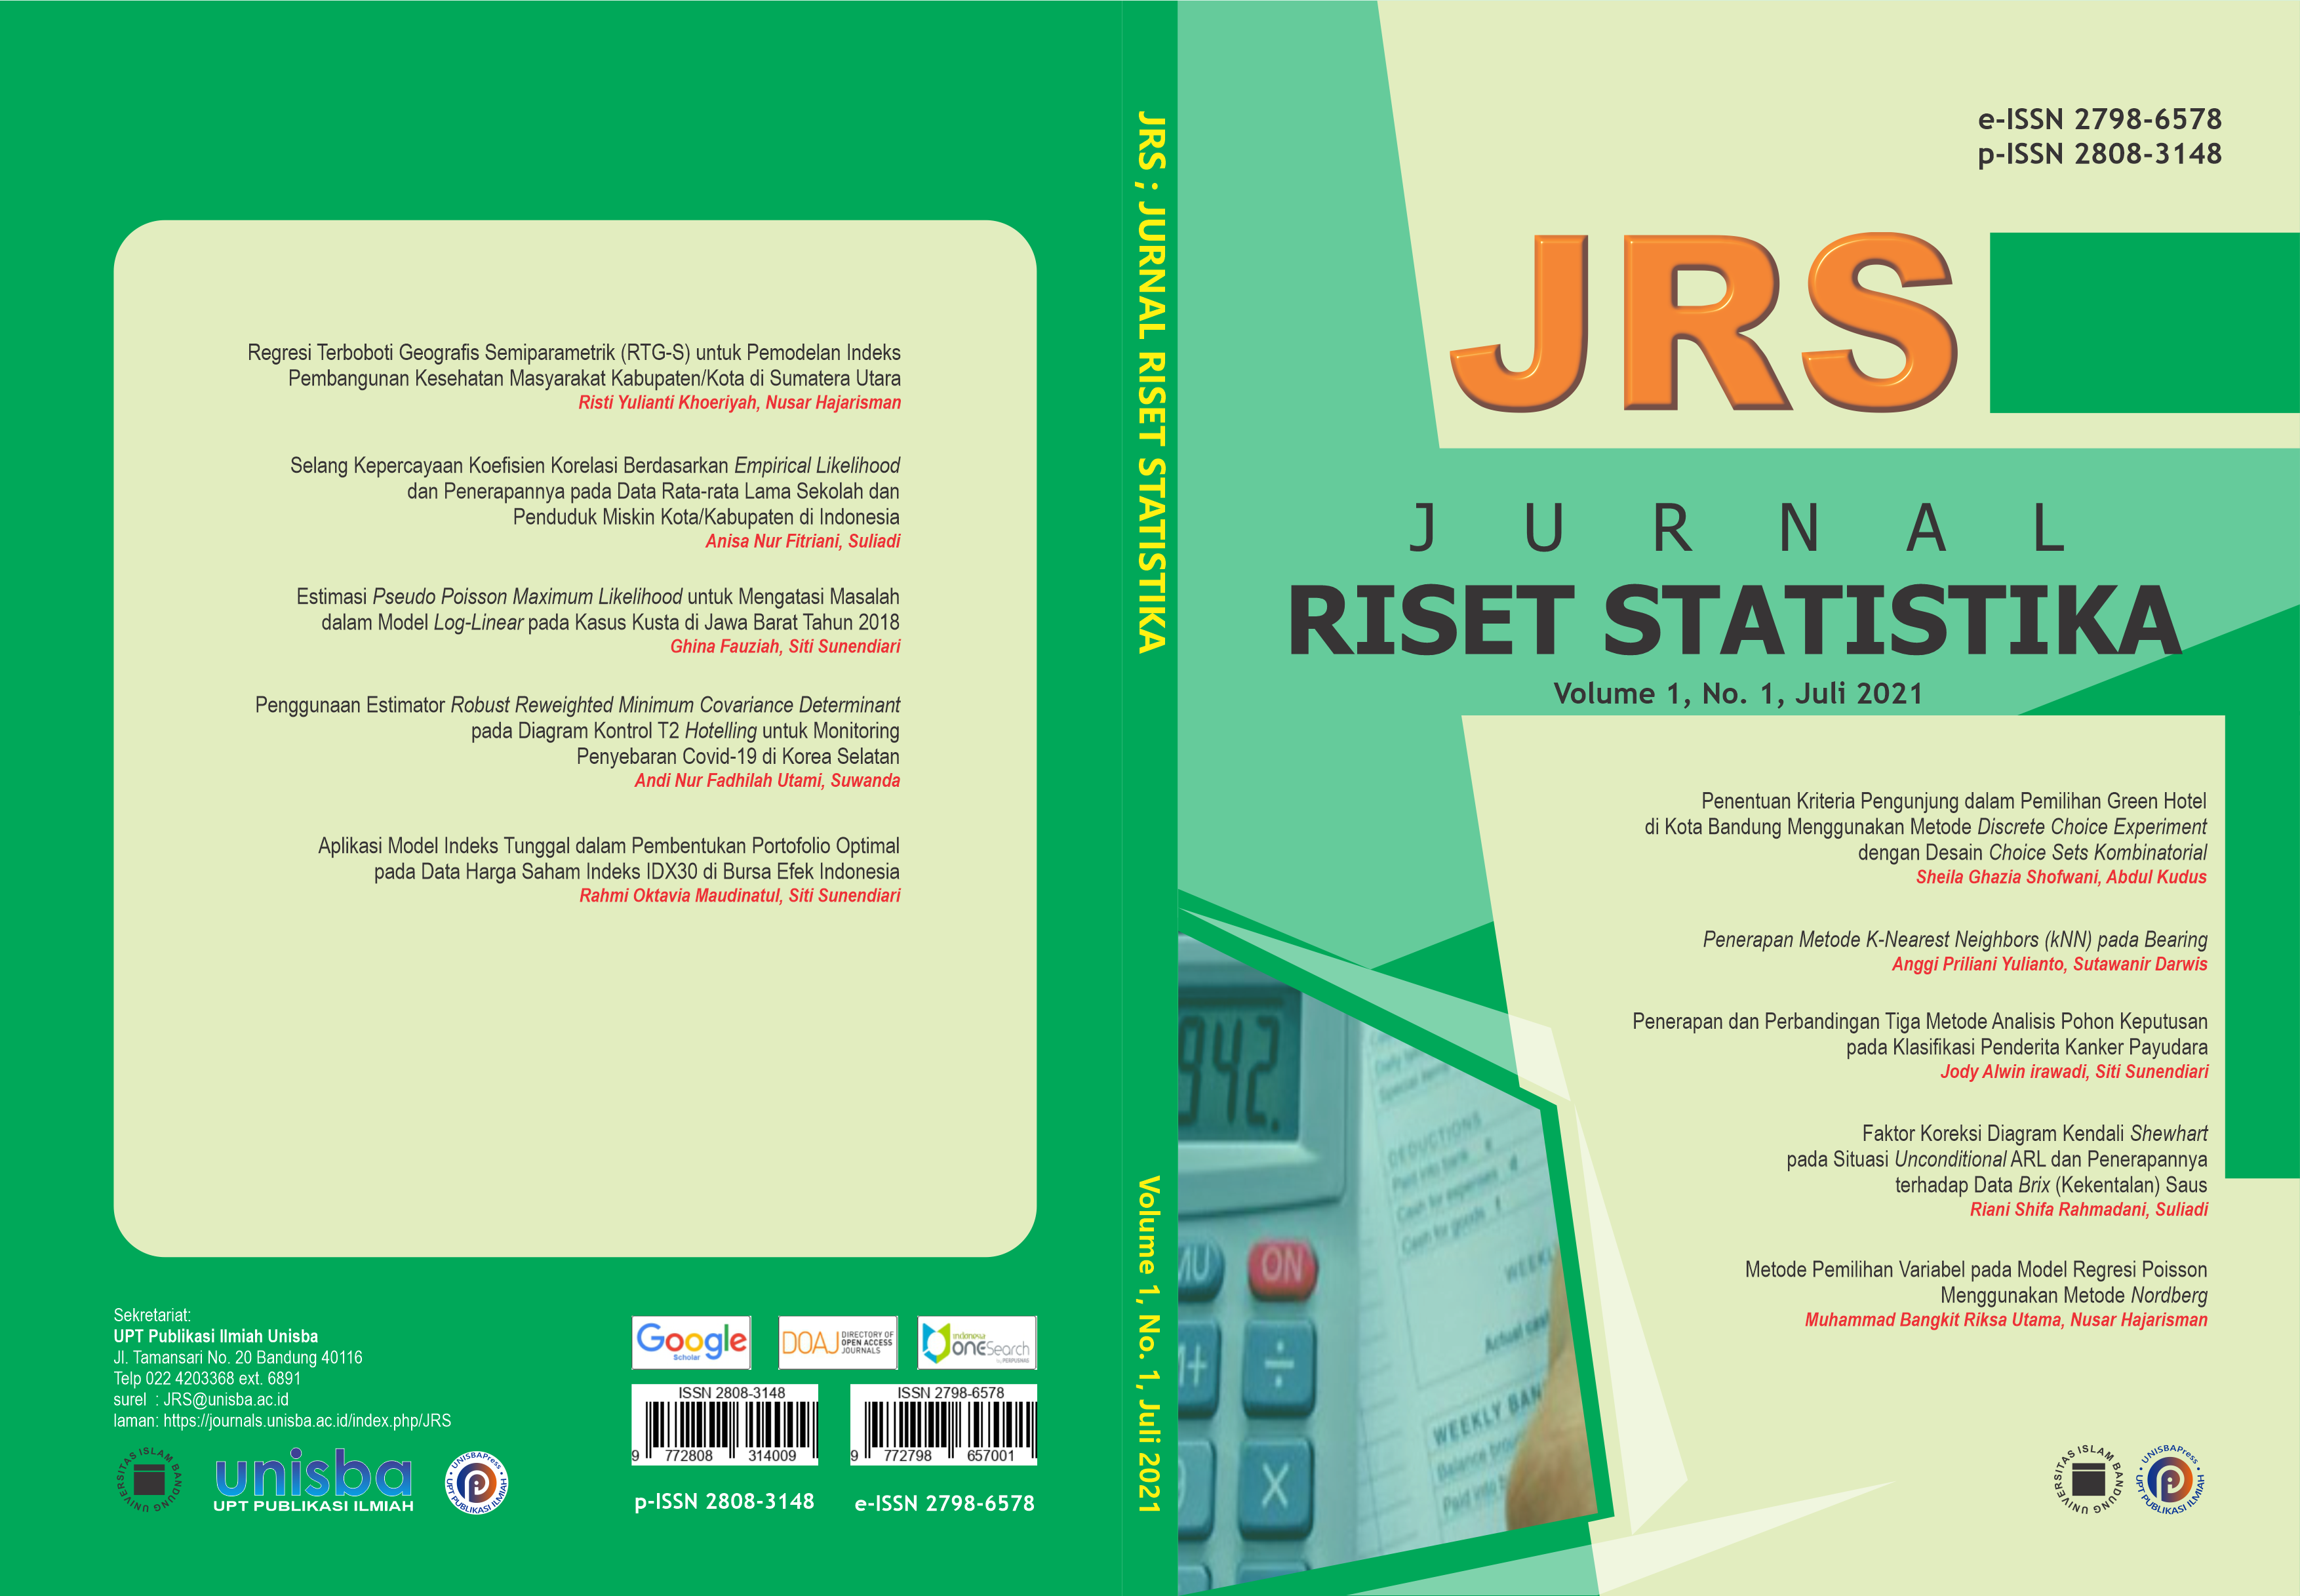 					View Volume 1, No. 1, Juli 2021, Jurnal Riset Statistika (JRS)
				